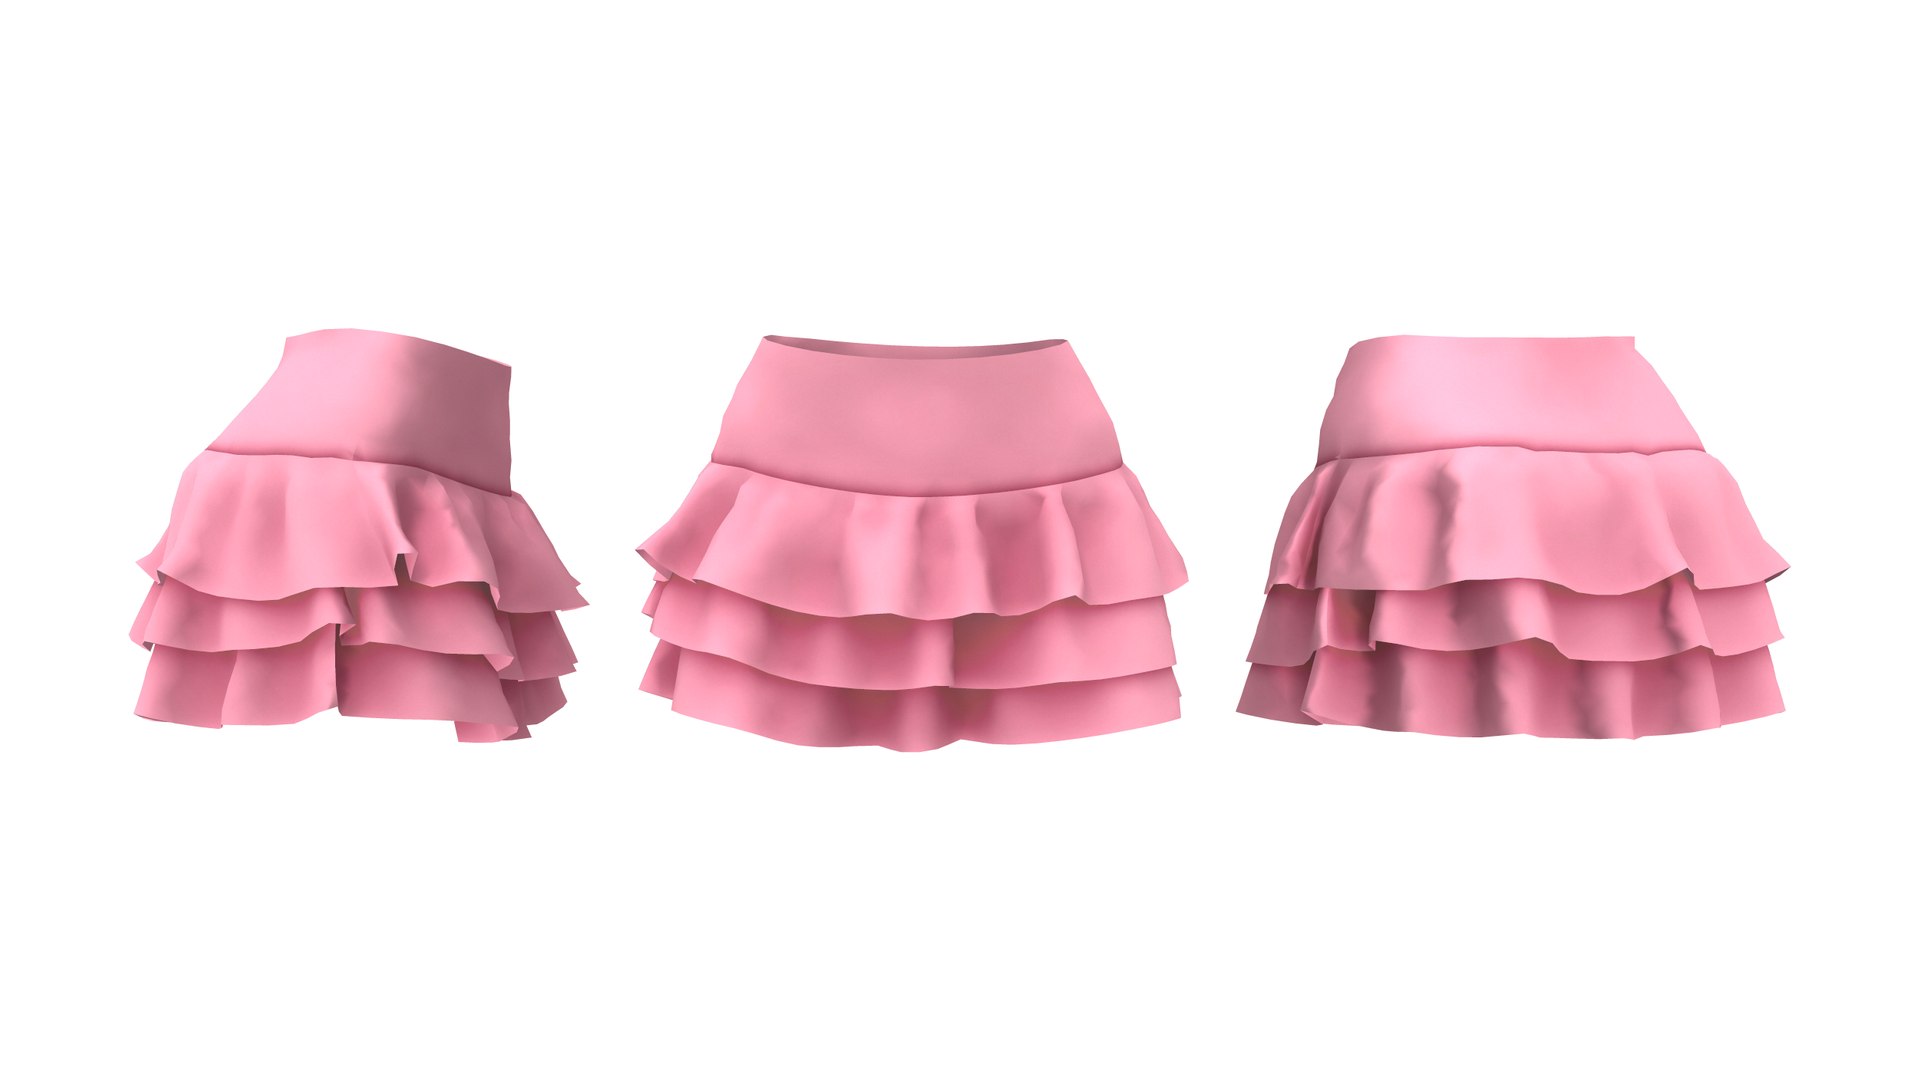 Ruffled Mini Skirt 3D model - TurboSquid 1802797